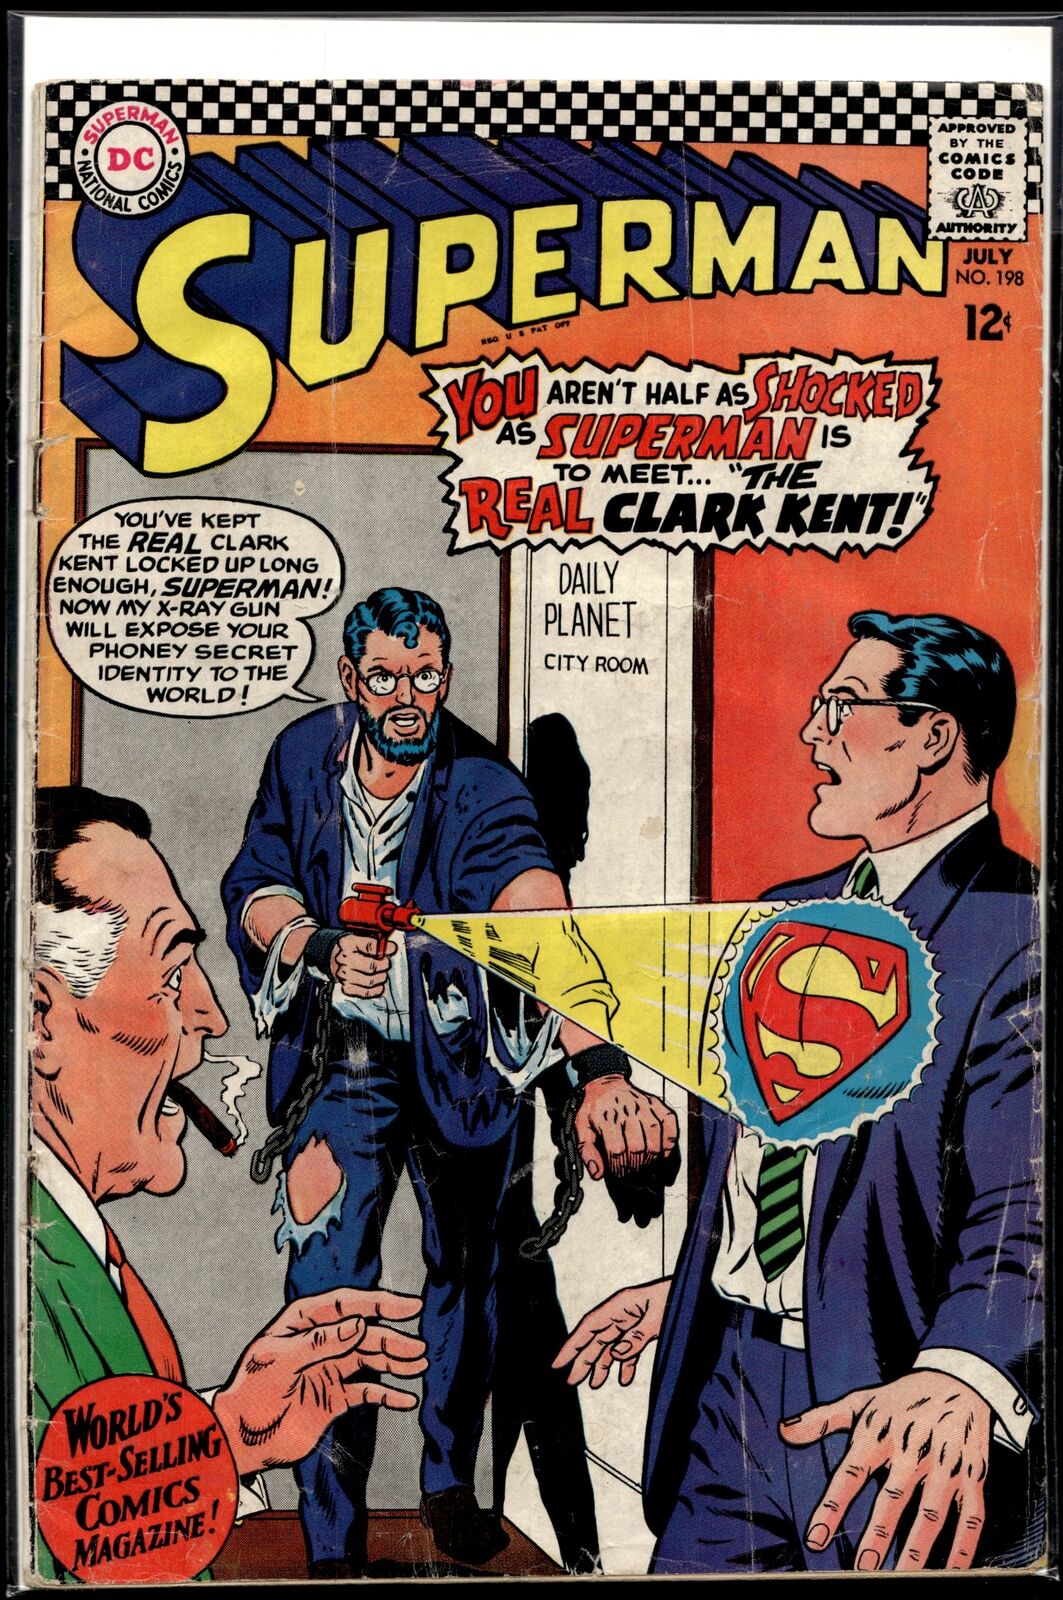 1967 Superman #198 DC Comic